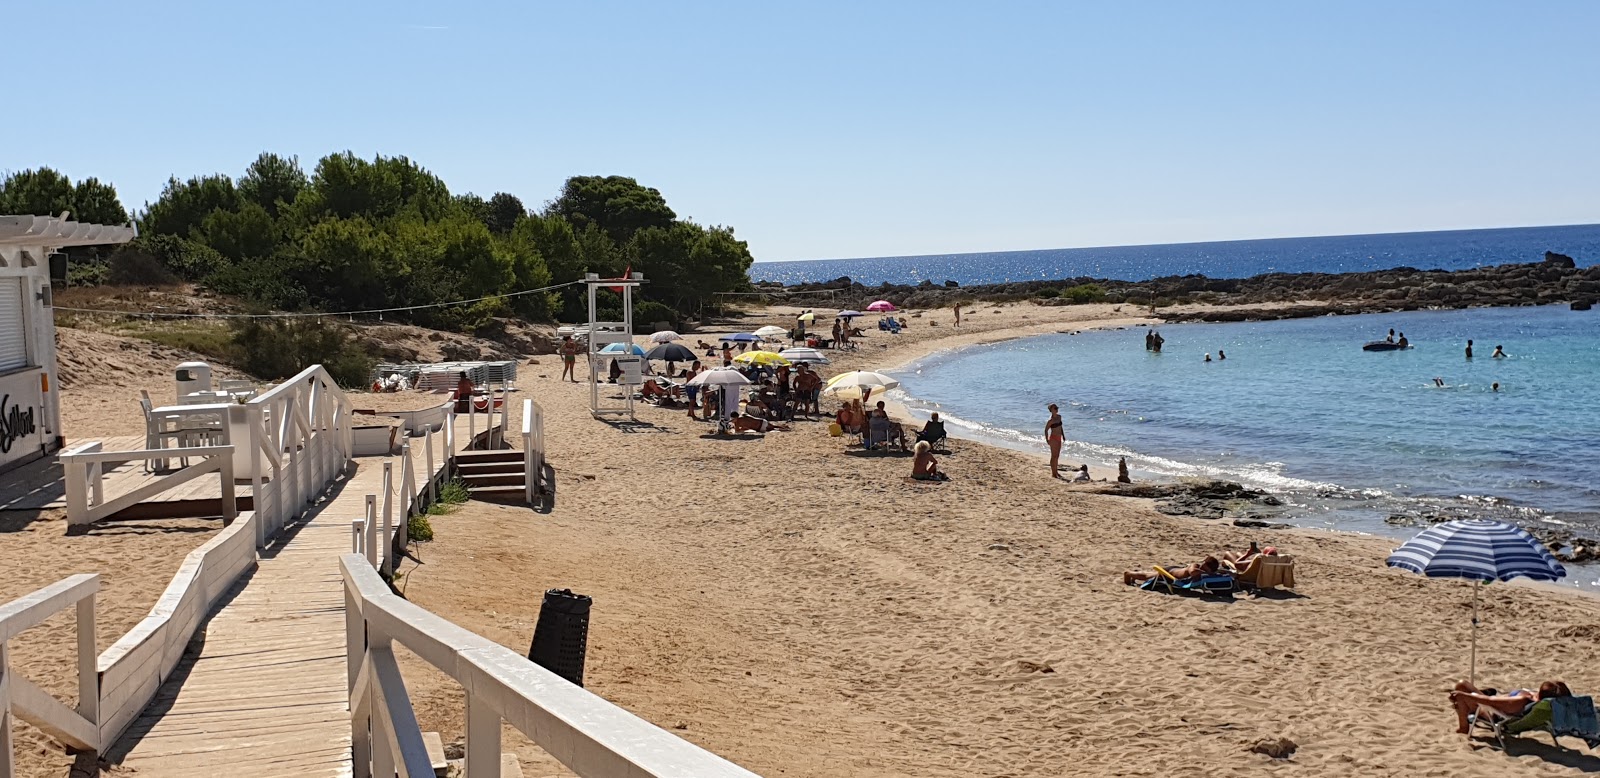 Foto de Spiaggia di Serrone localizado em área natural